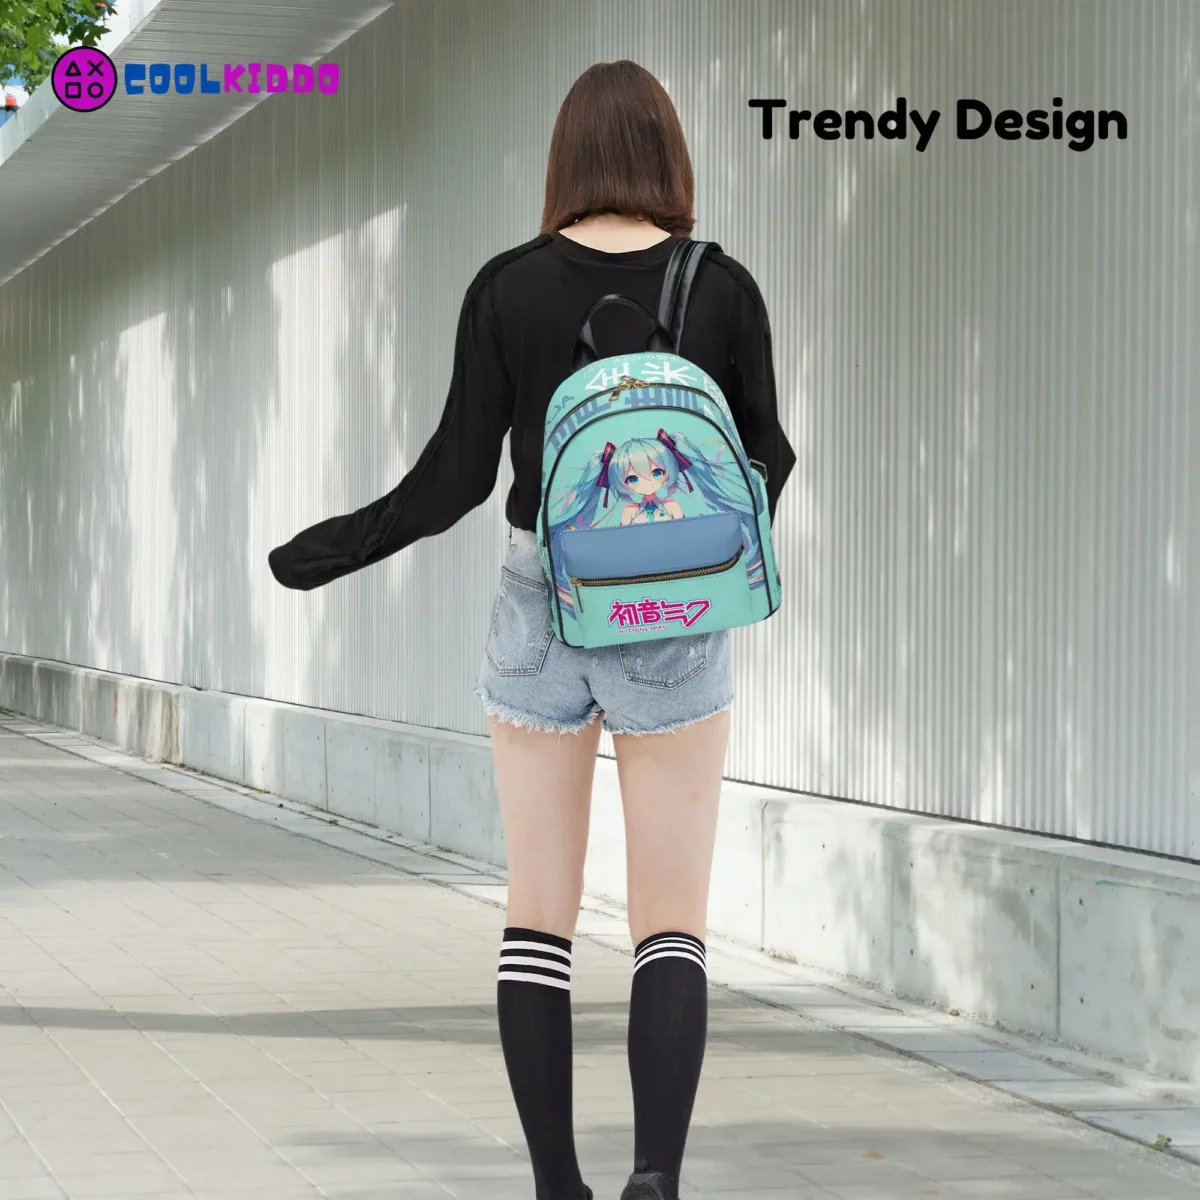 Hatsune Miku Anime Style Mini Leather Backpack For Girls/Youth | School Book Bag Cool Kiddo 20